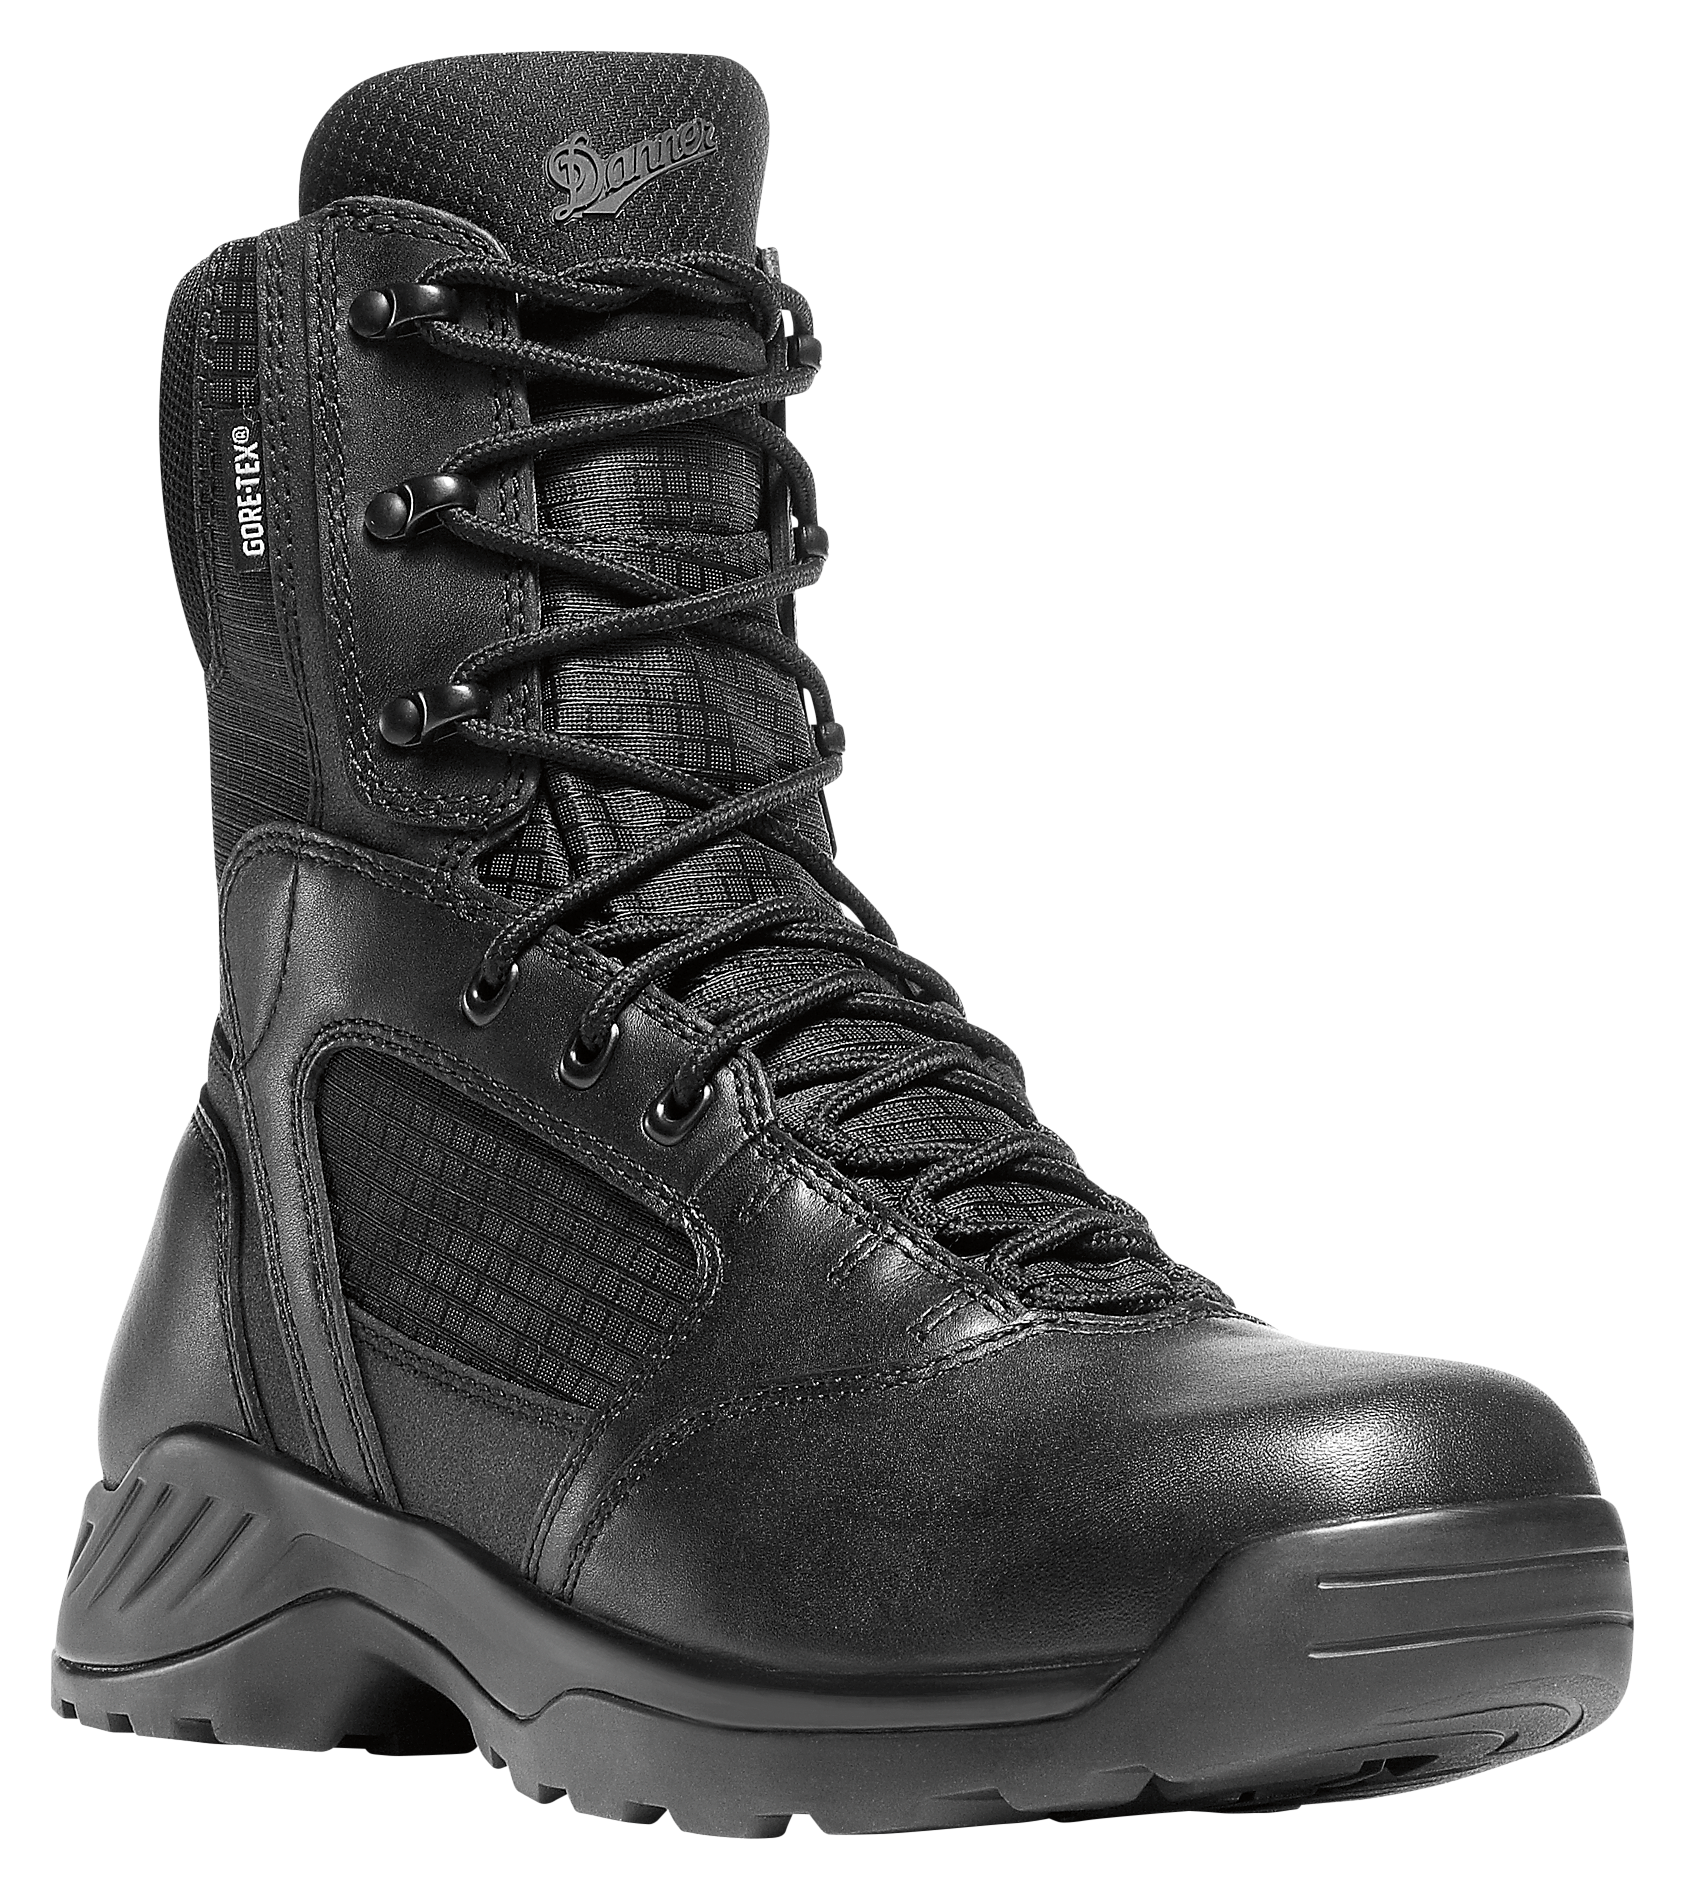 Danner Kinetic GTX Side-Zip Waterproof Tactical Duty Boots for Men - Black - 8W